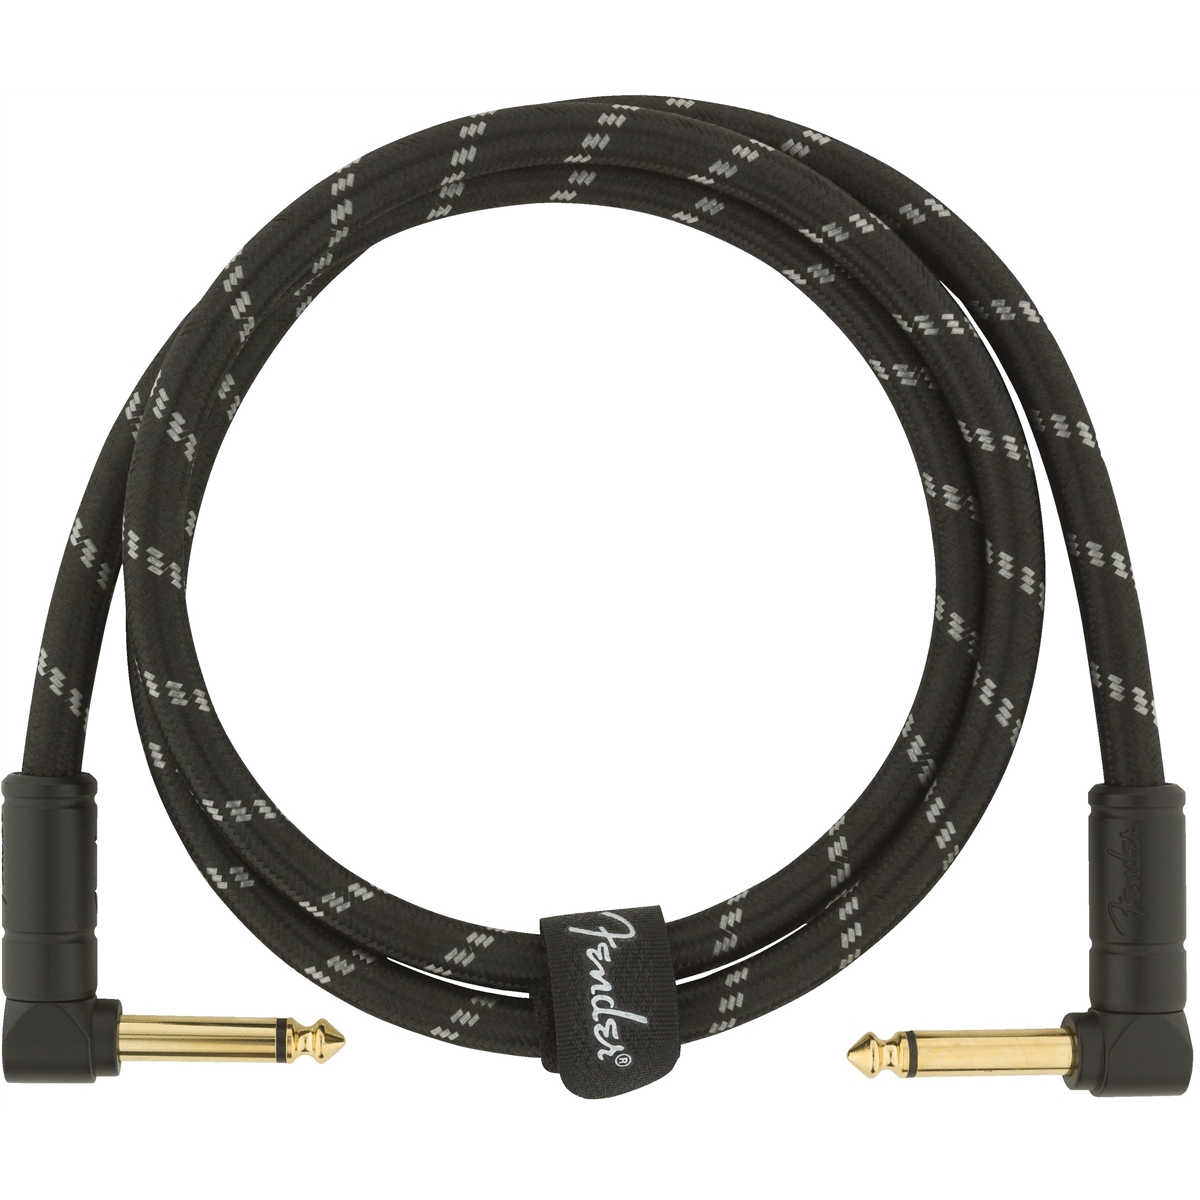 Fender Deluxe Series Instrument Cable, 3 FT, Black Tweed